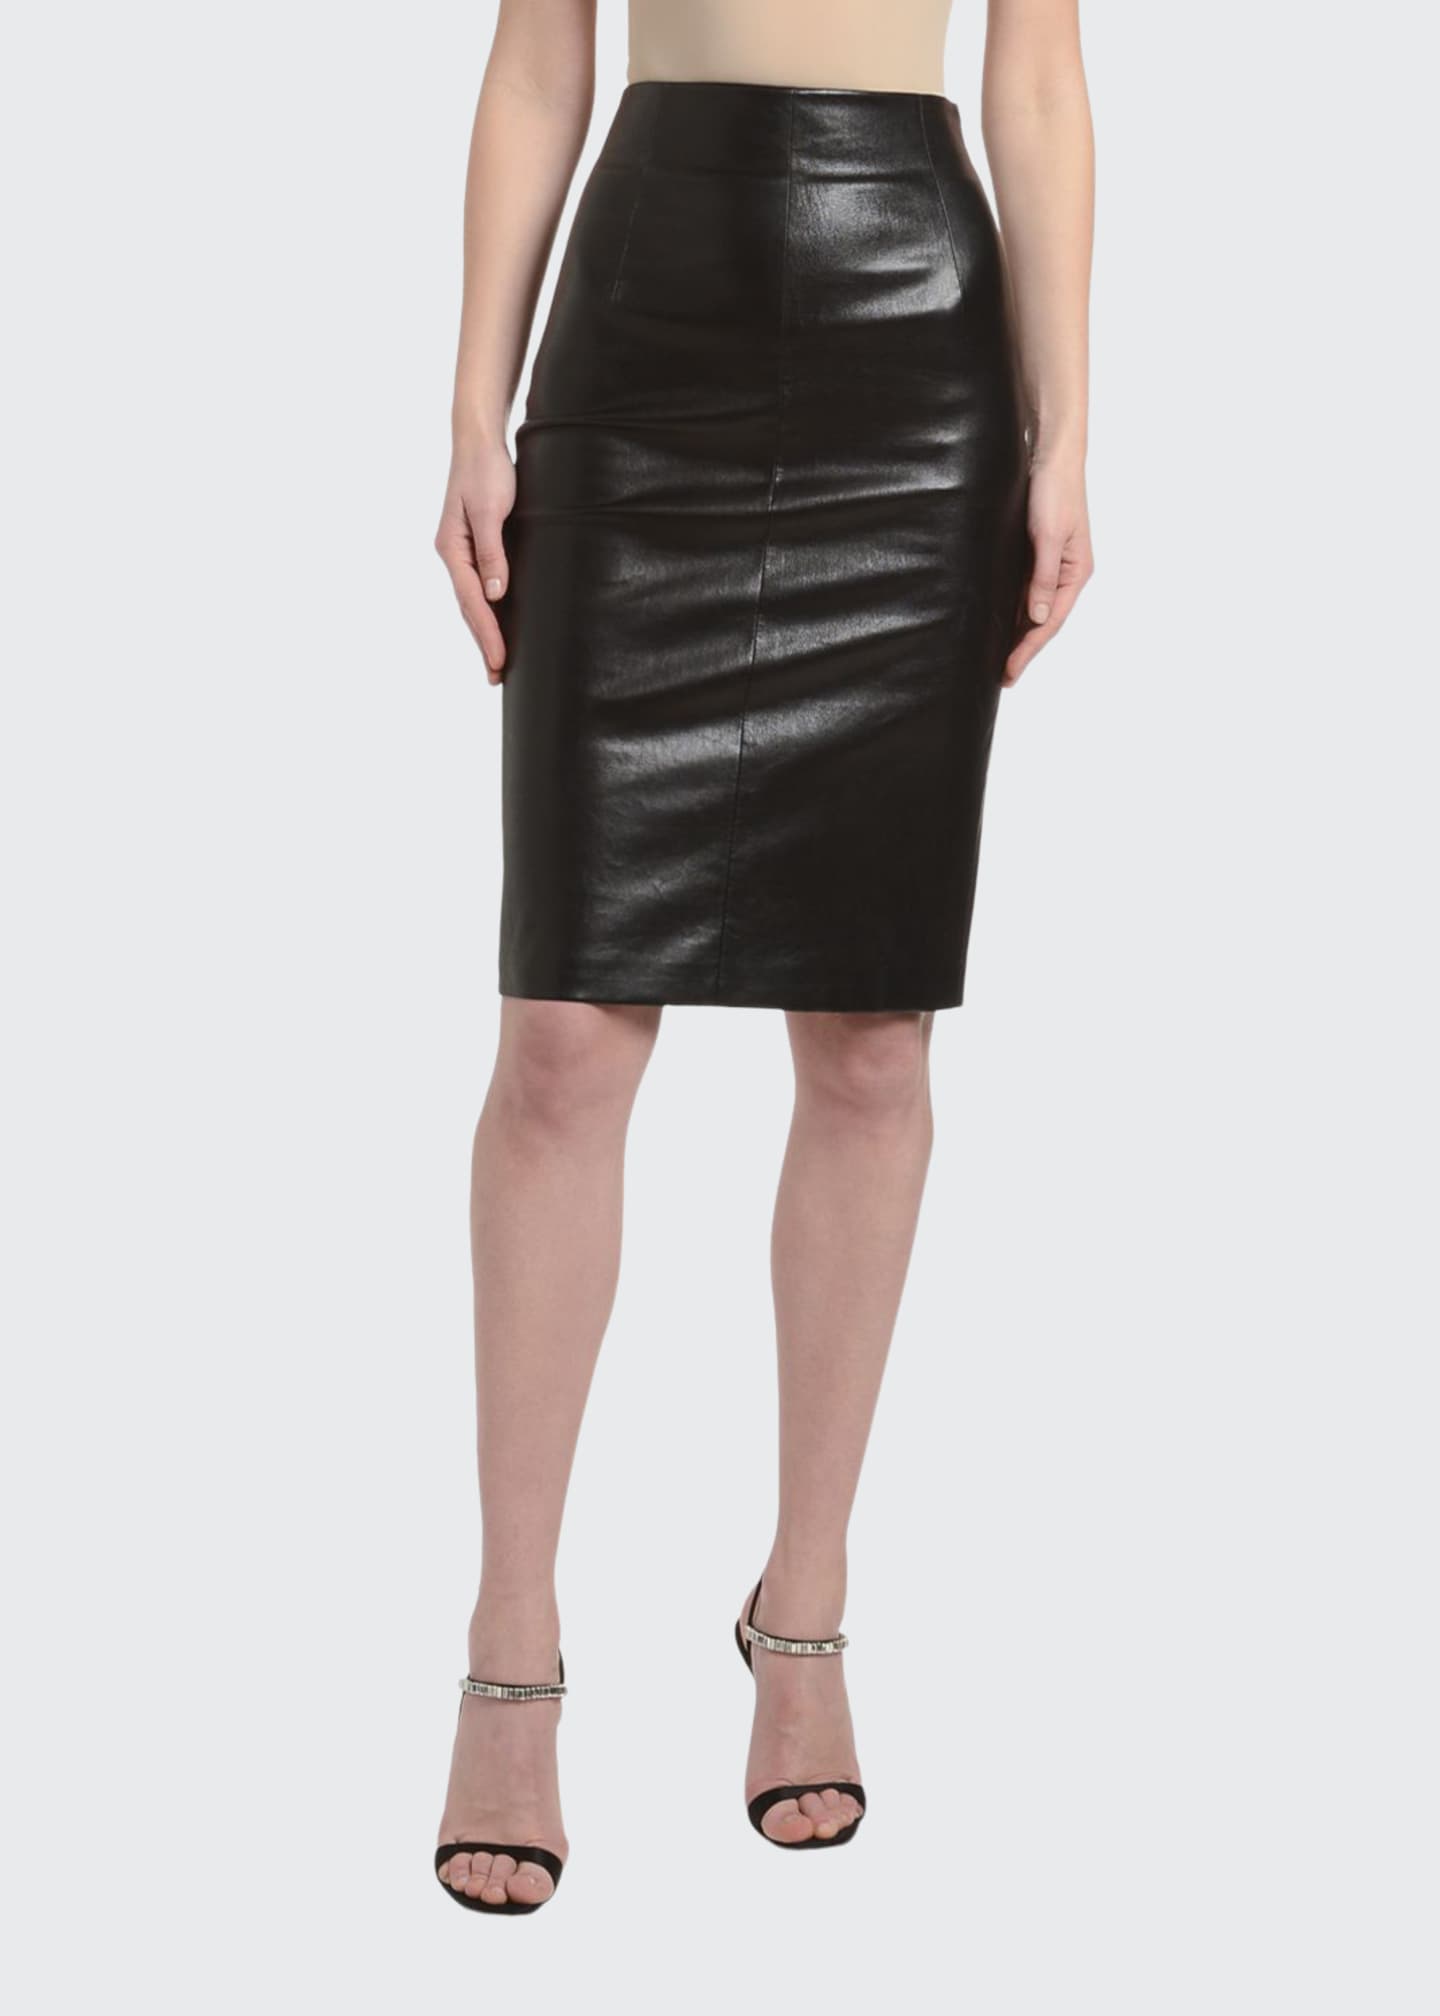 Prada Leather Pencil Skirt - Bergdorf Goodman